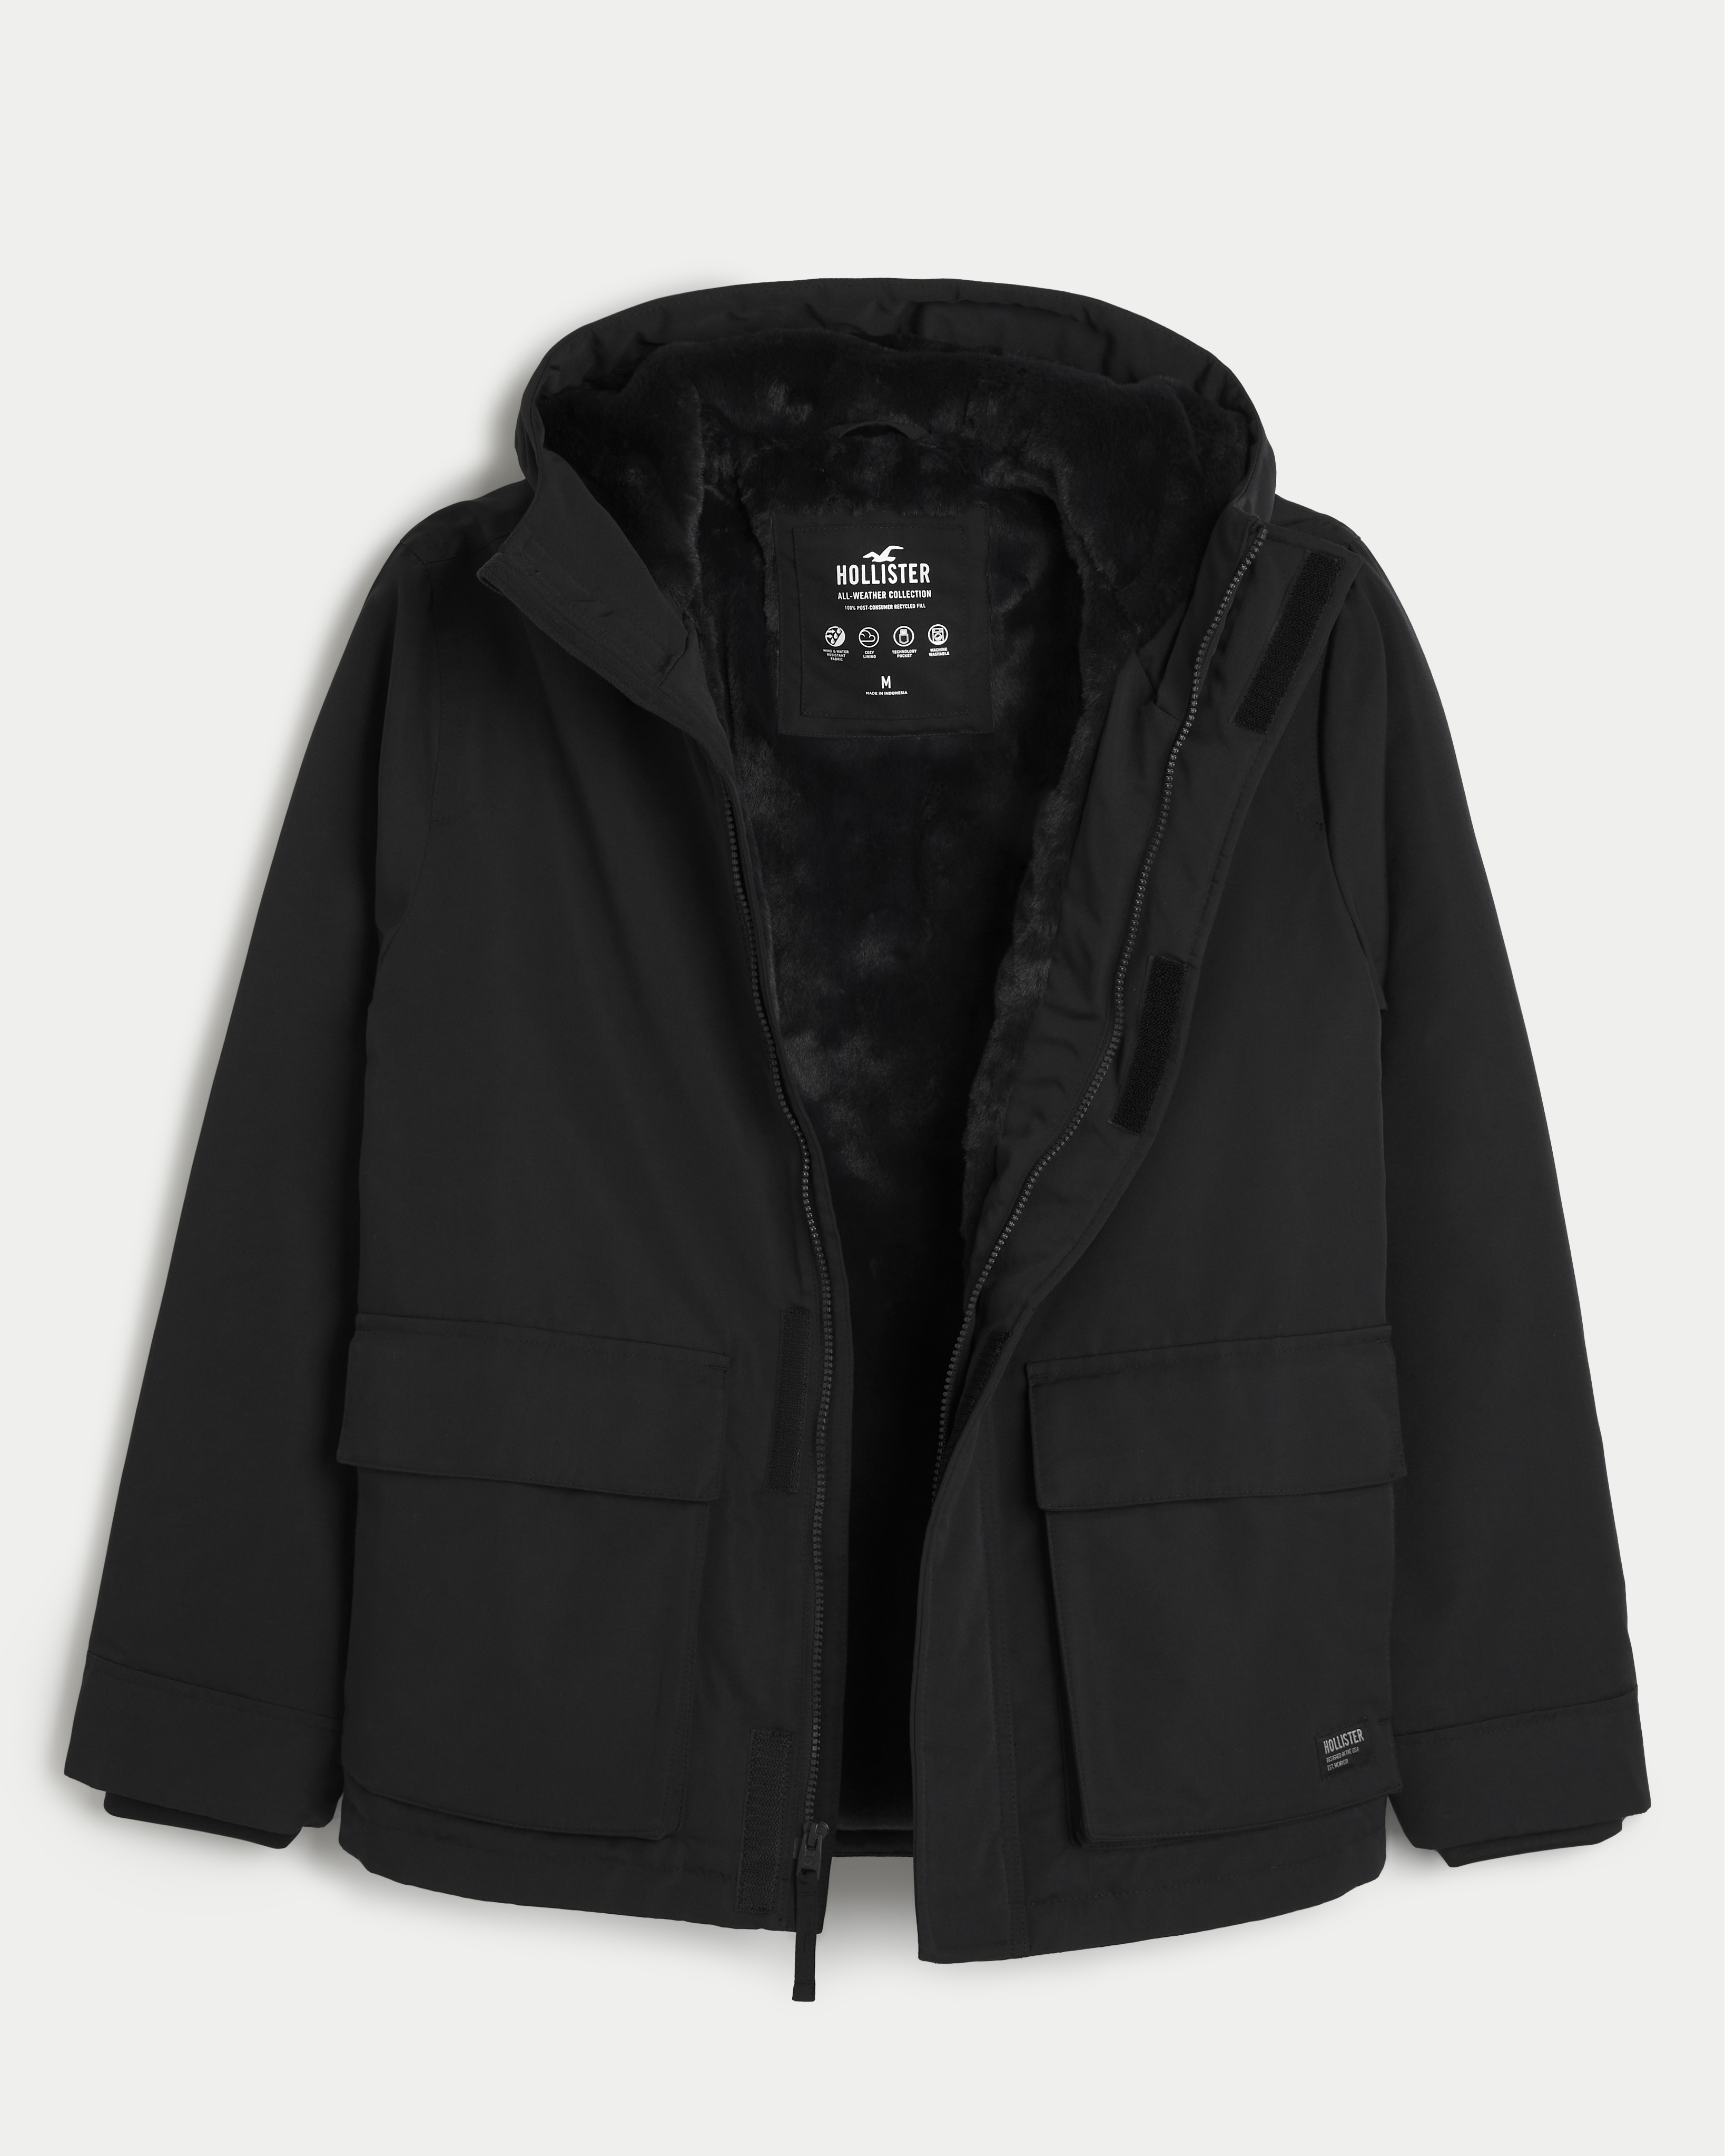 Hollister Co. ALL WEATHER JACKET - Winter jacket - black - Zalando.de